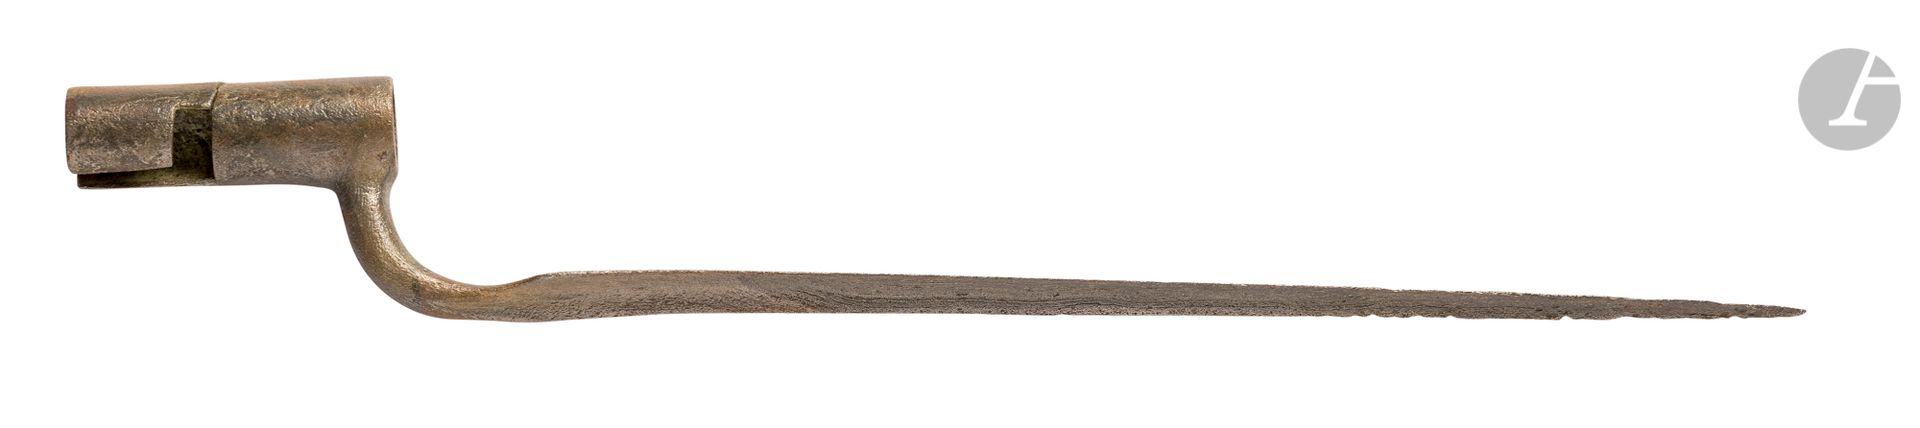 Null 法国
插座刺刀。
不带套圈的插座。三角形刀片。
总长度：45厘米在
状态（点蚀）。约1750年。